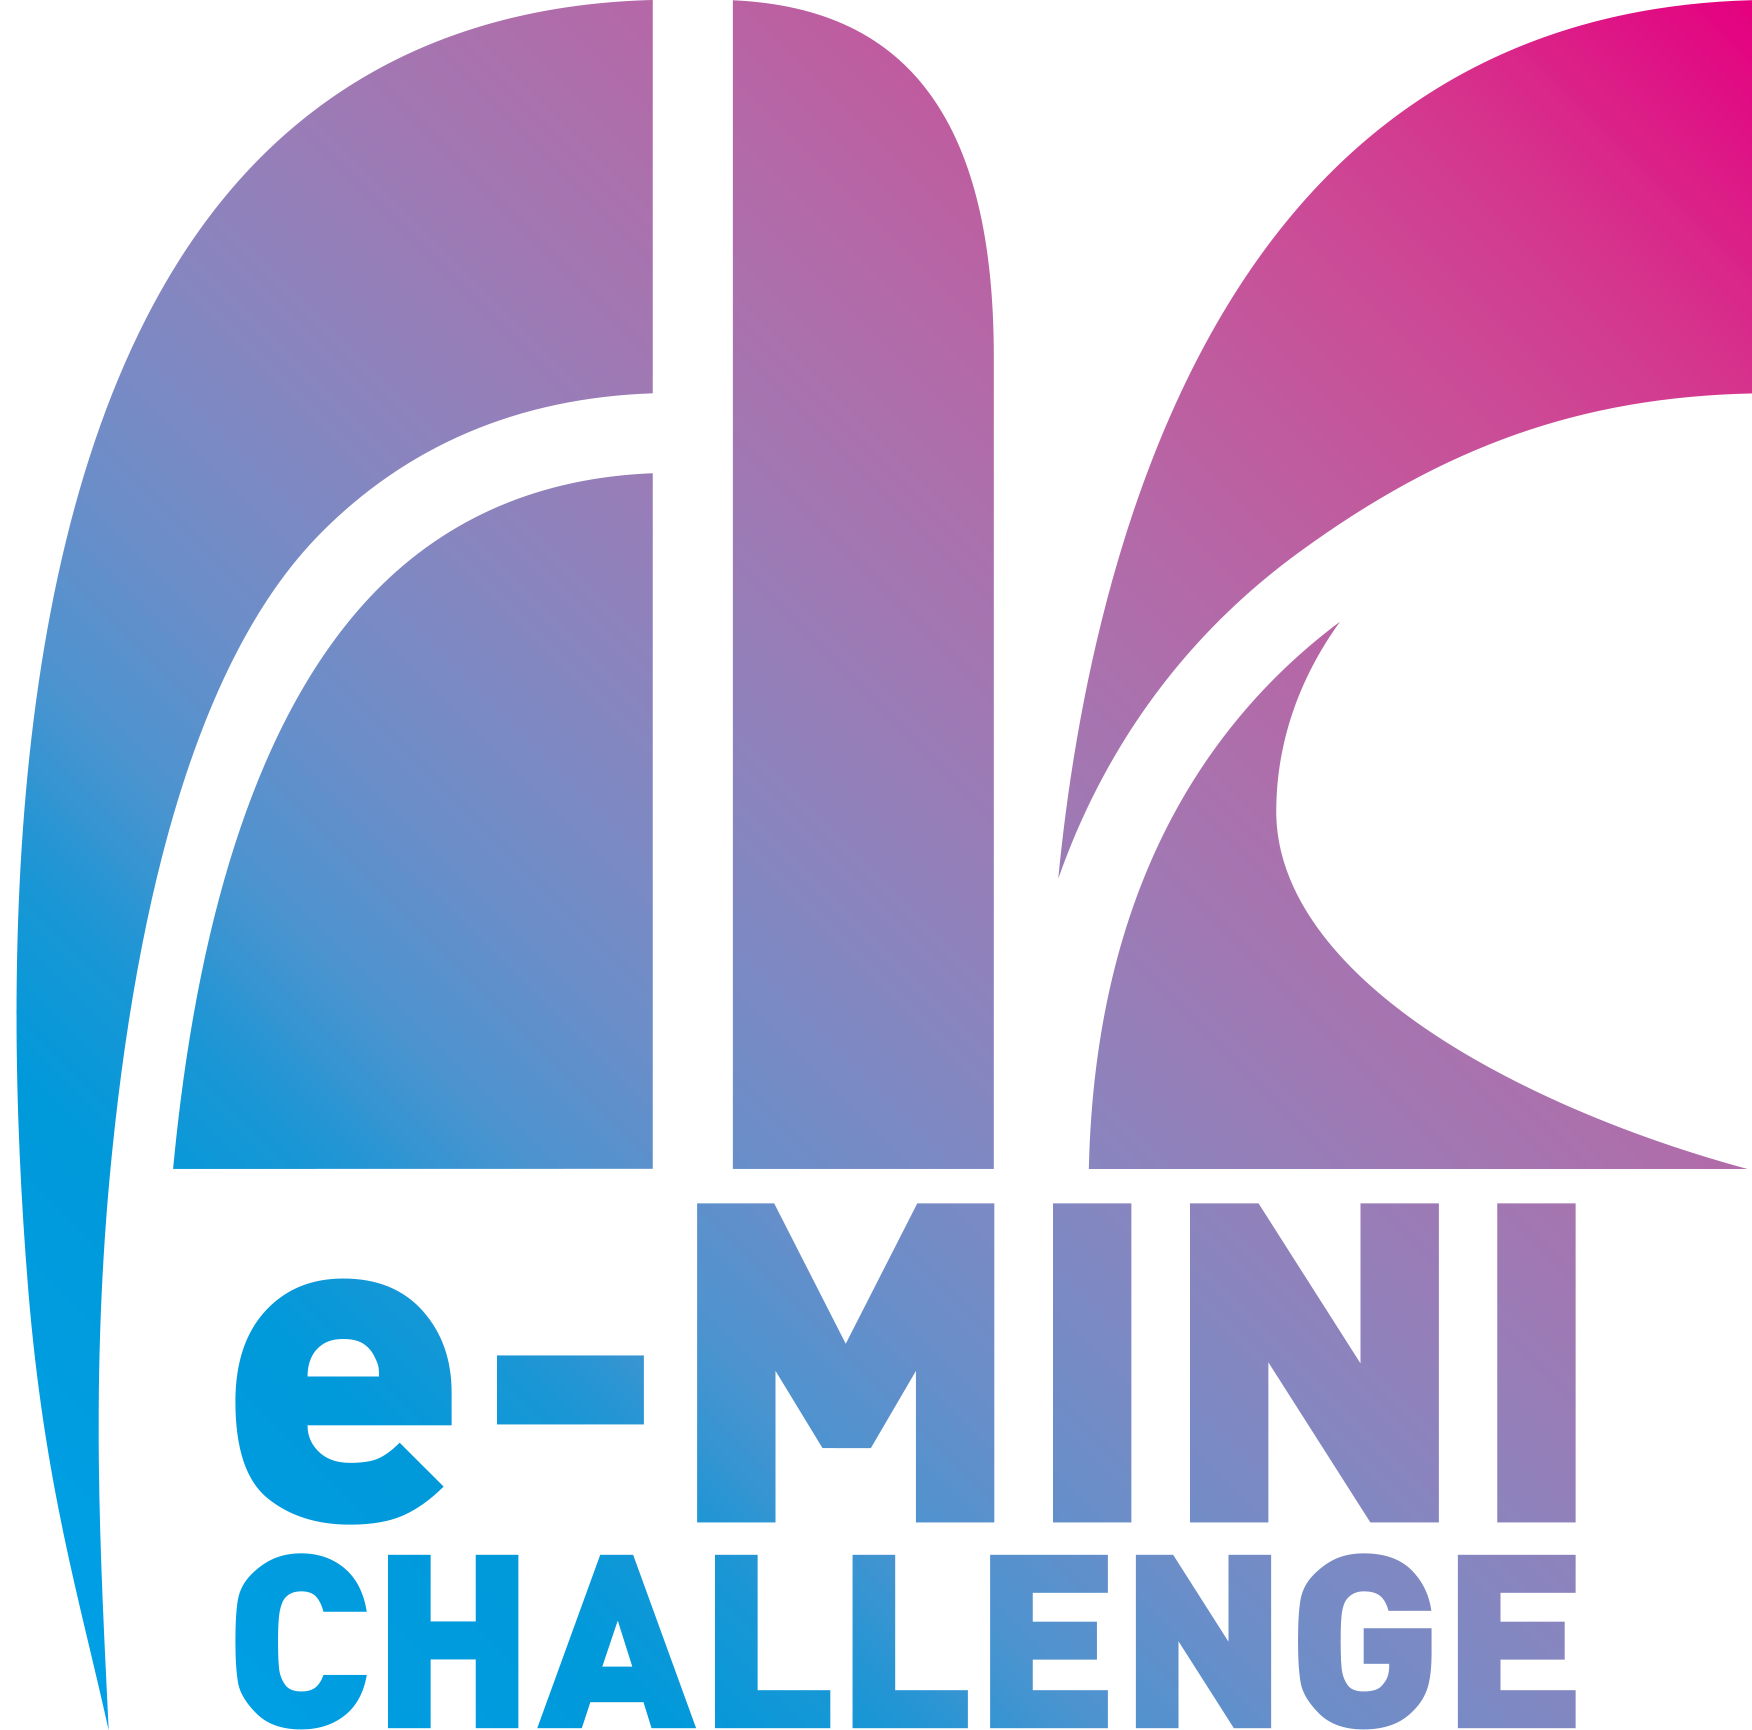 e-MINI CHALLENGE®2022 S2 Rd.1 ポイントランキング公開